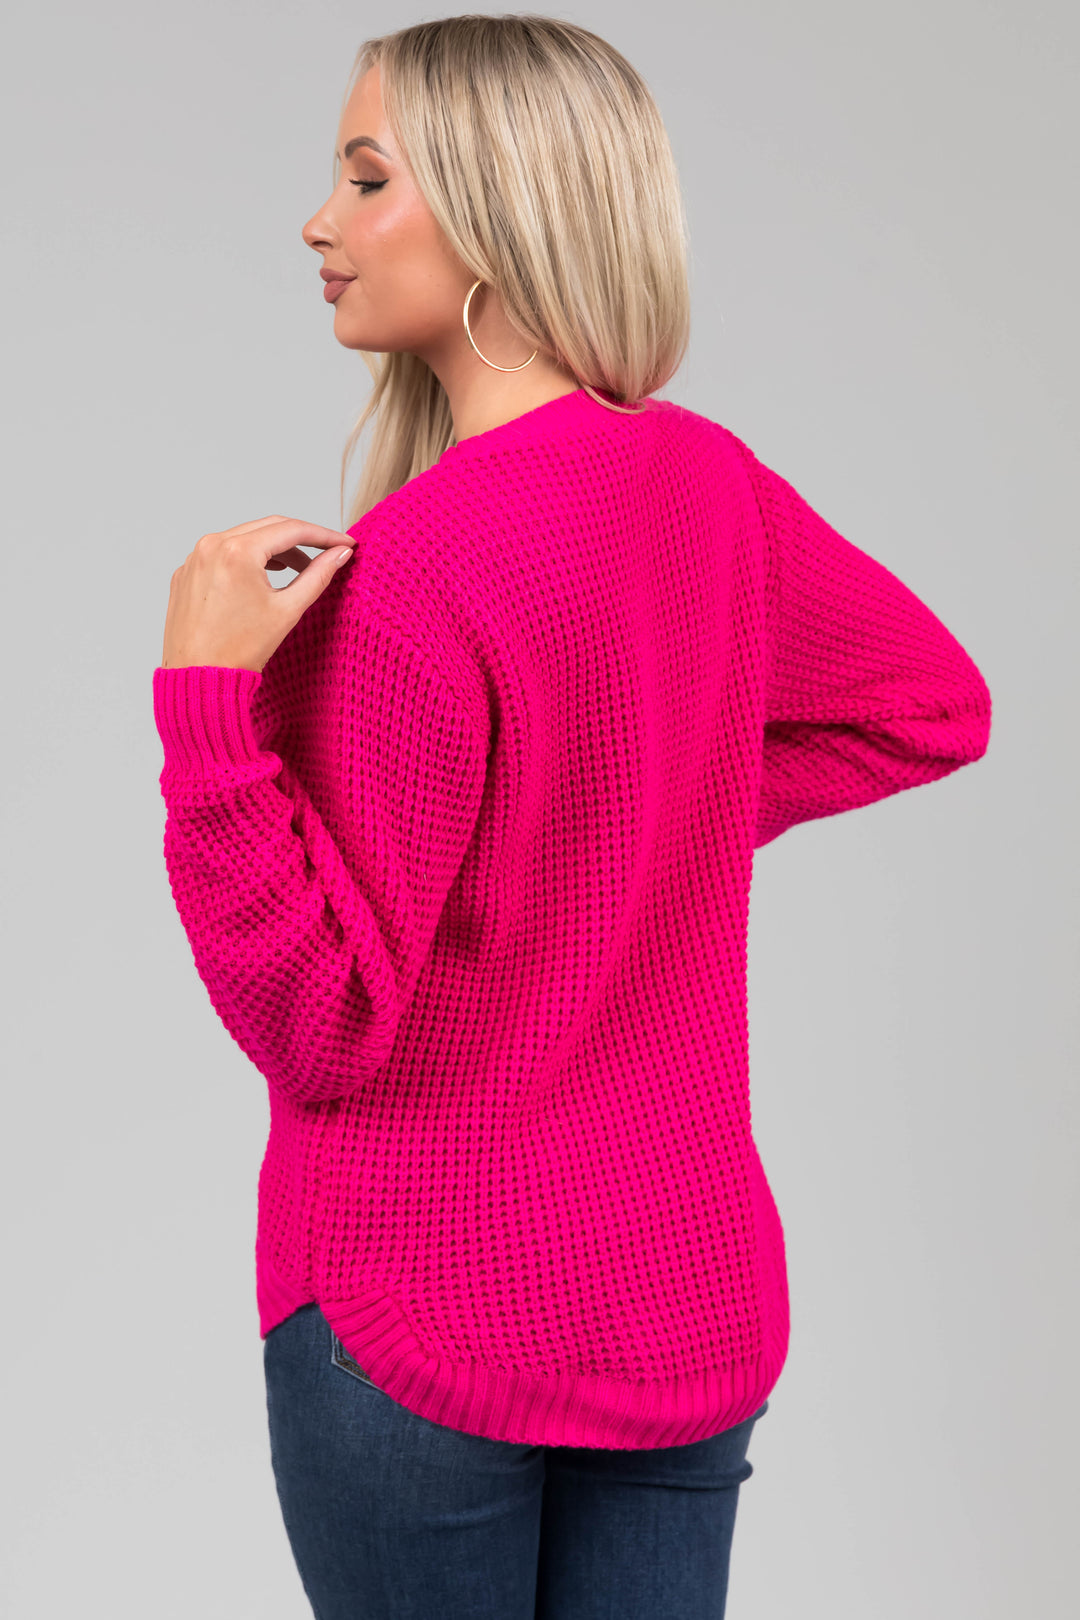 Zen Waffle Knit Sweater (Hot Pink)